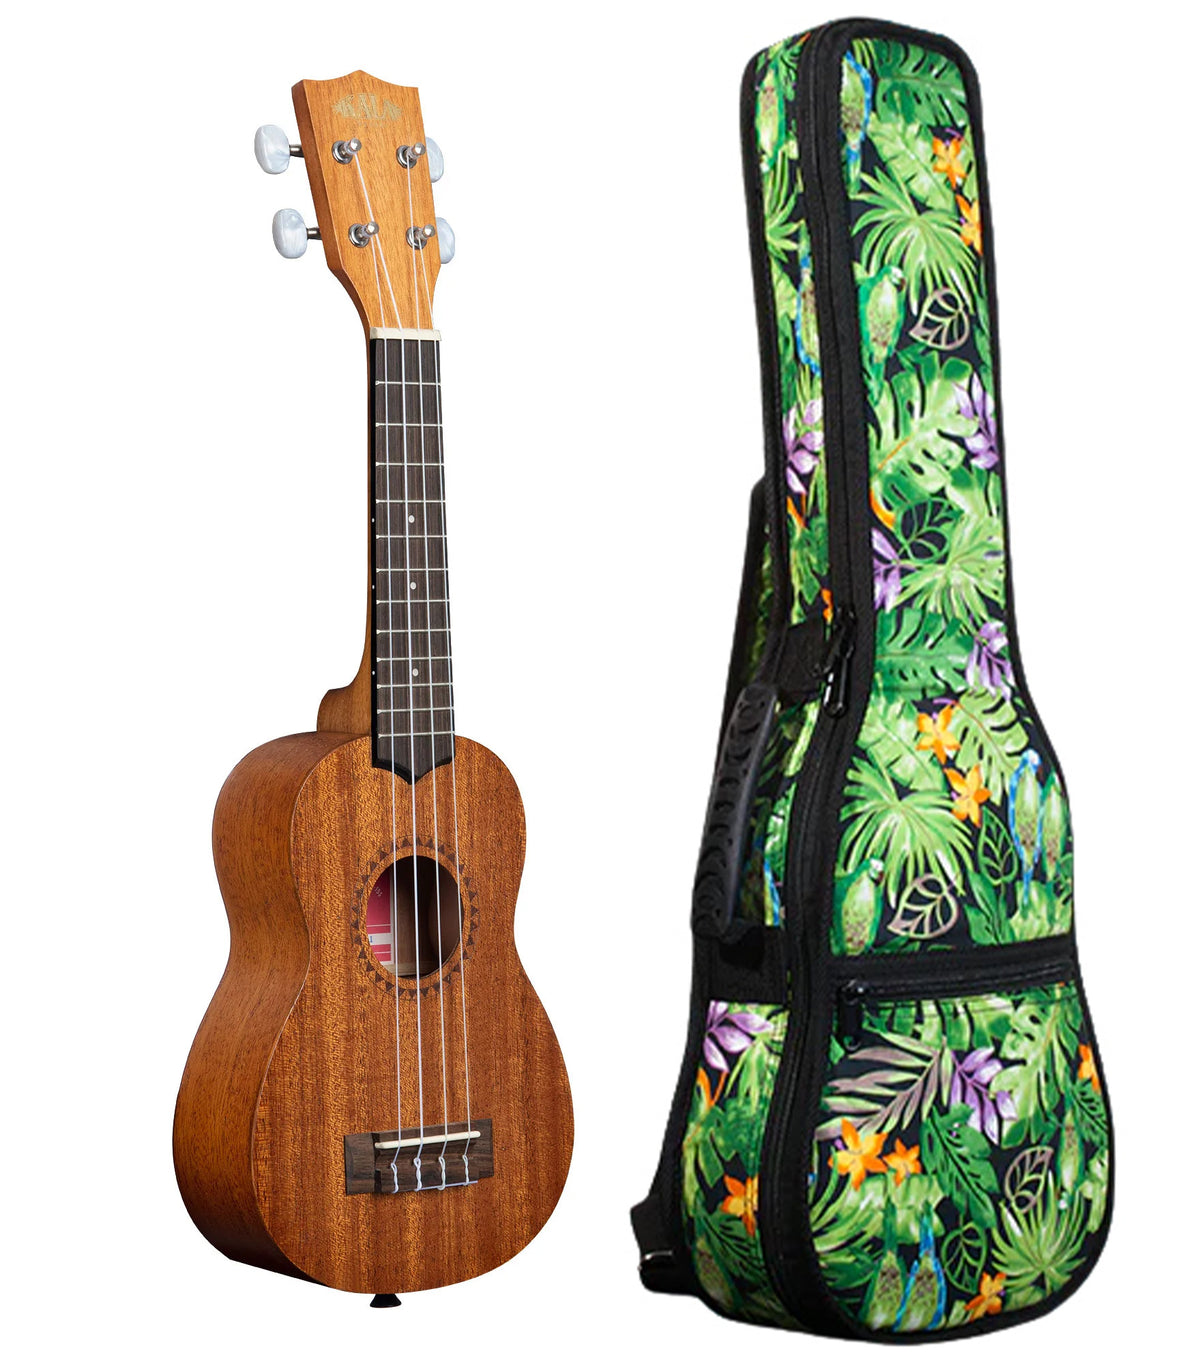 KA-15S Satin Mahogany Soprano Ukulele Includes Gigbag Floral Print, Padded with Backpack Straps